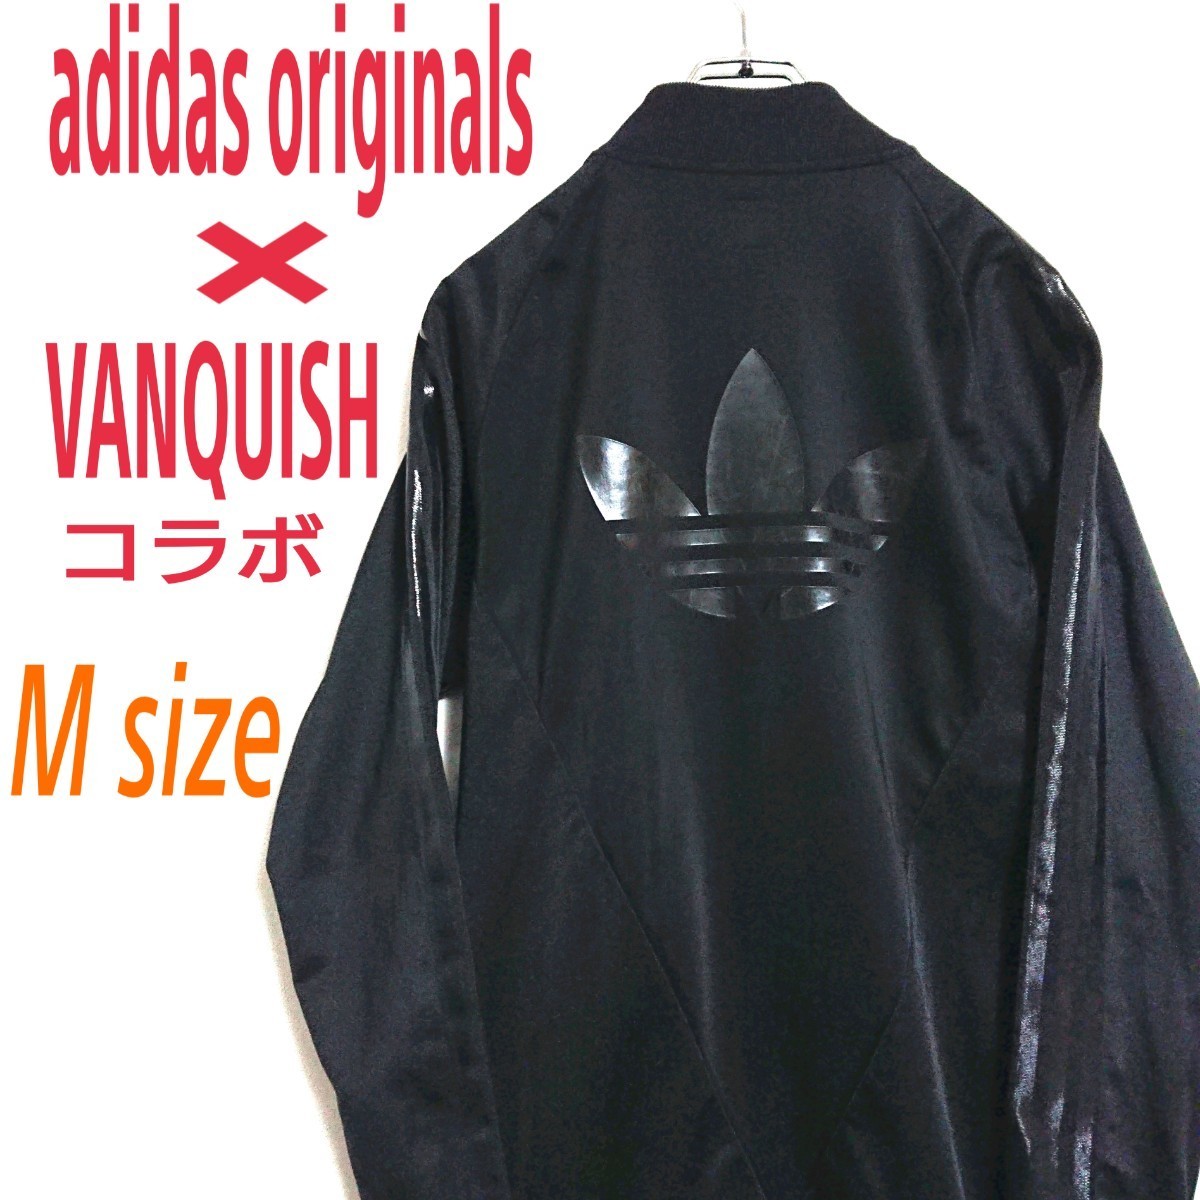 adidas originals アディダスオリジナルス × VANQUISH バンキッシュコラボ 黒色 ビッグロゴ ジャージ トラックジャケット Mサイズ